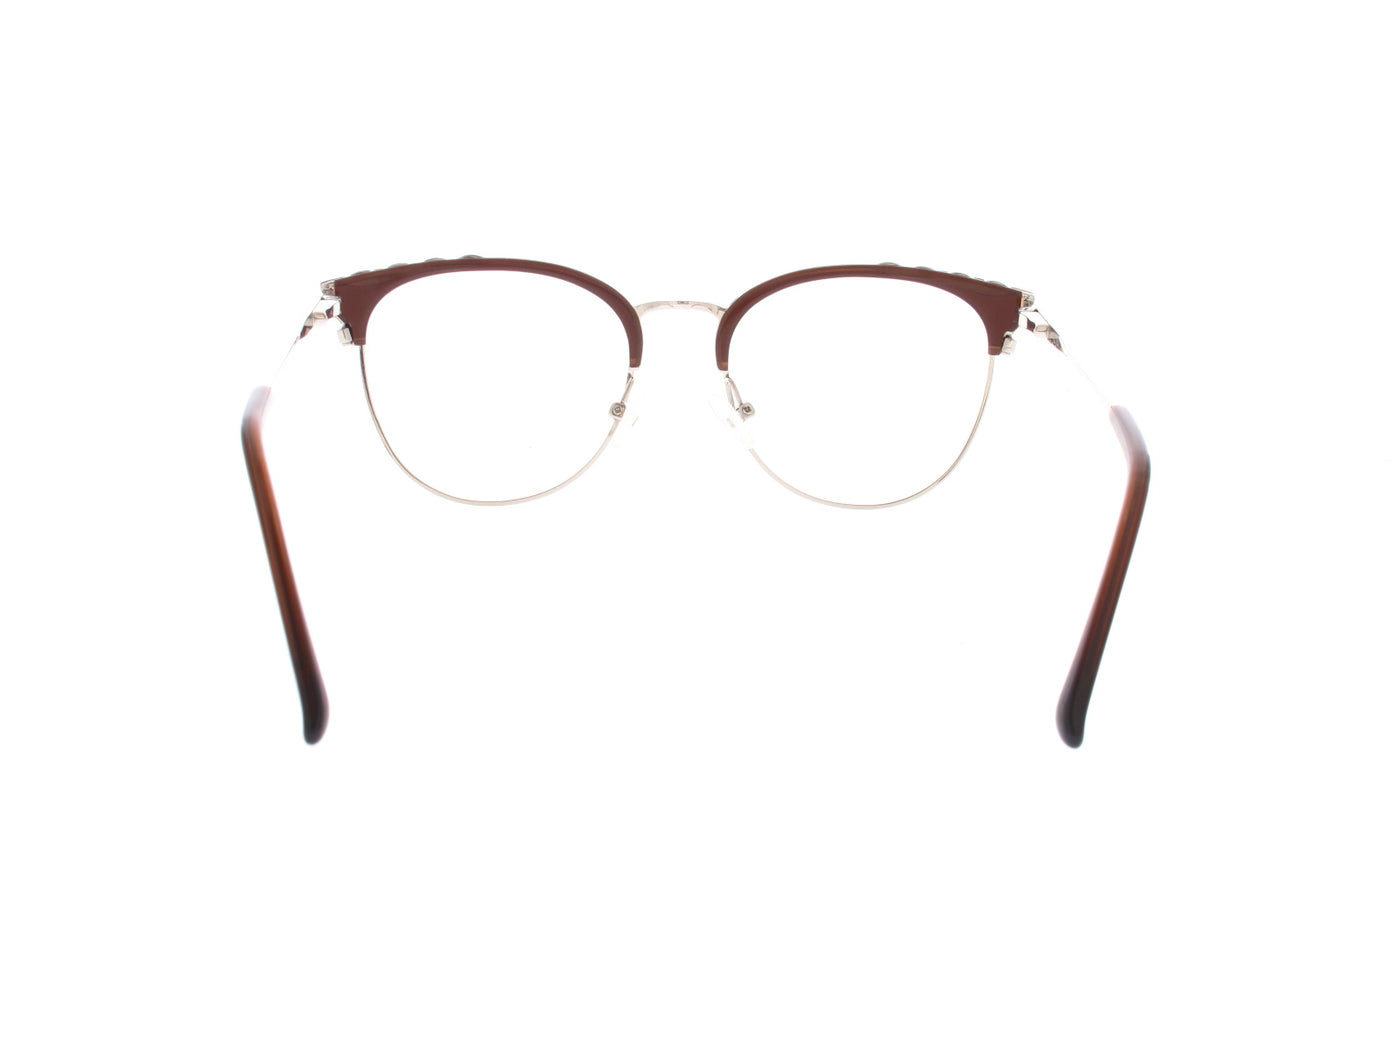 Cateye Glasses 930203